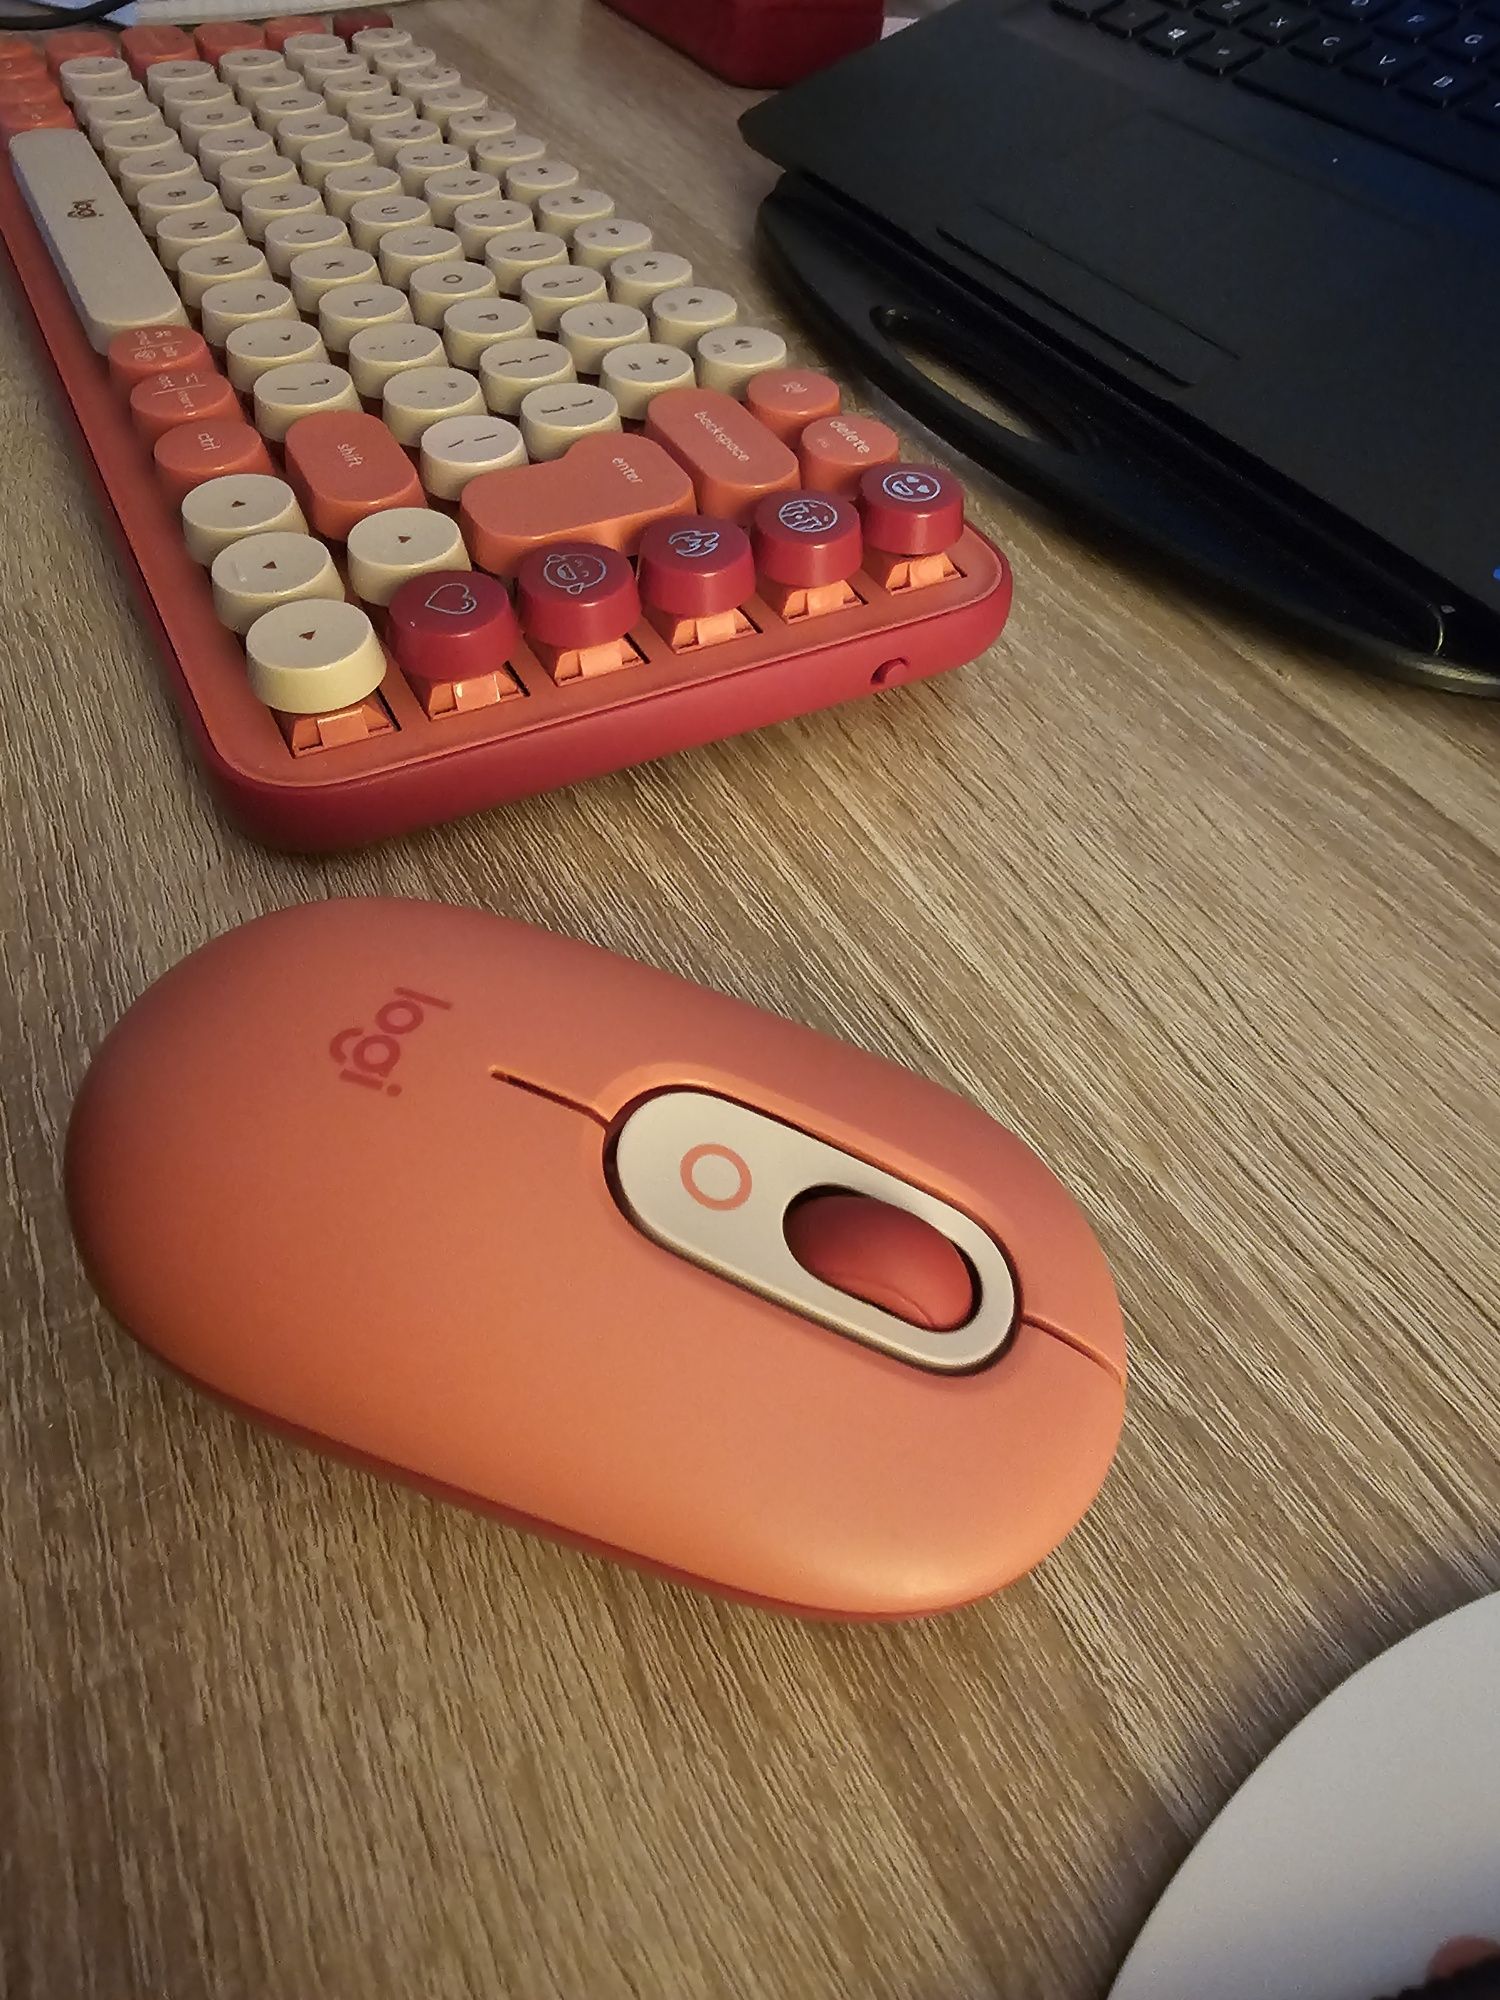 Tastatura+mouse Logitech LogiPop